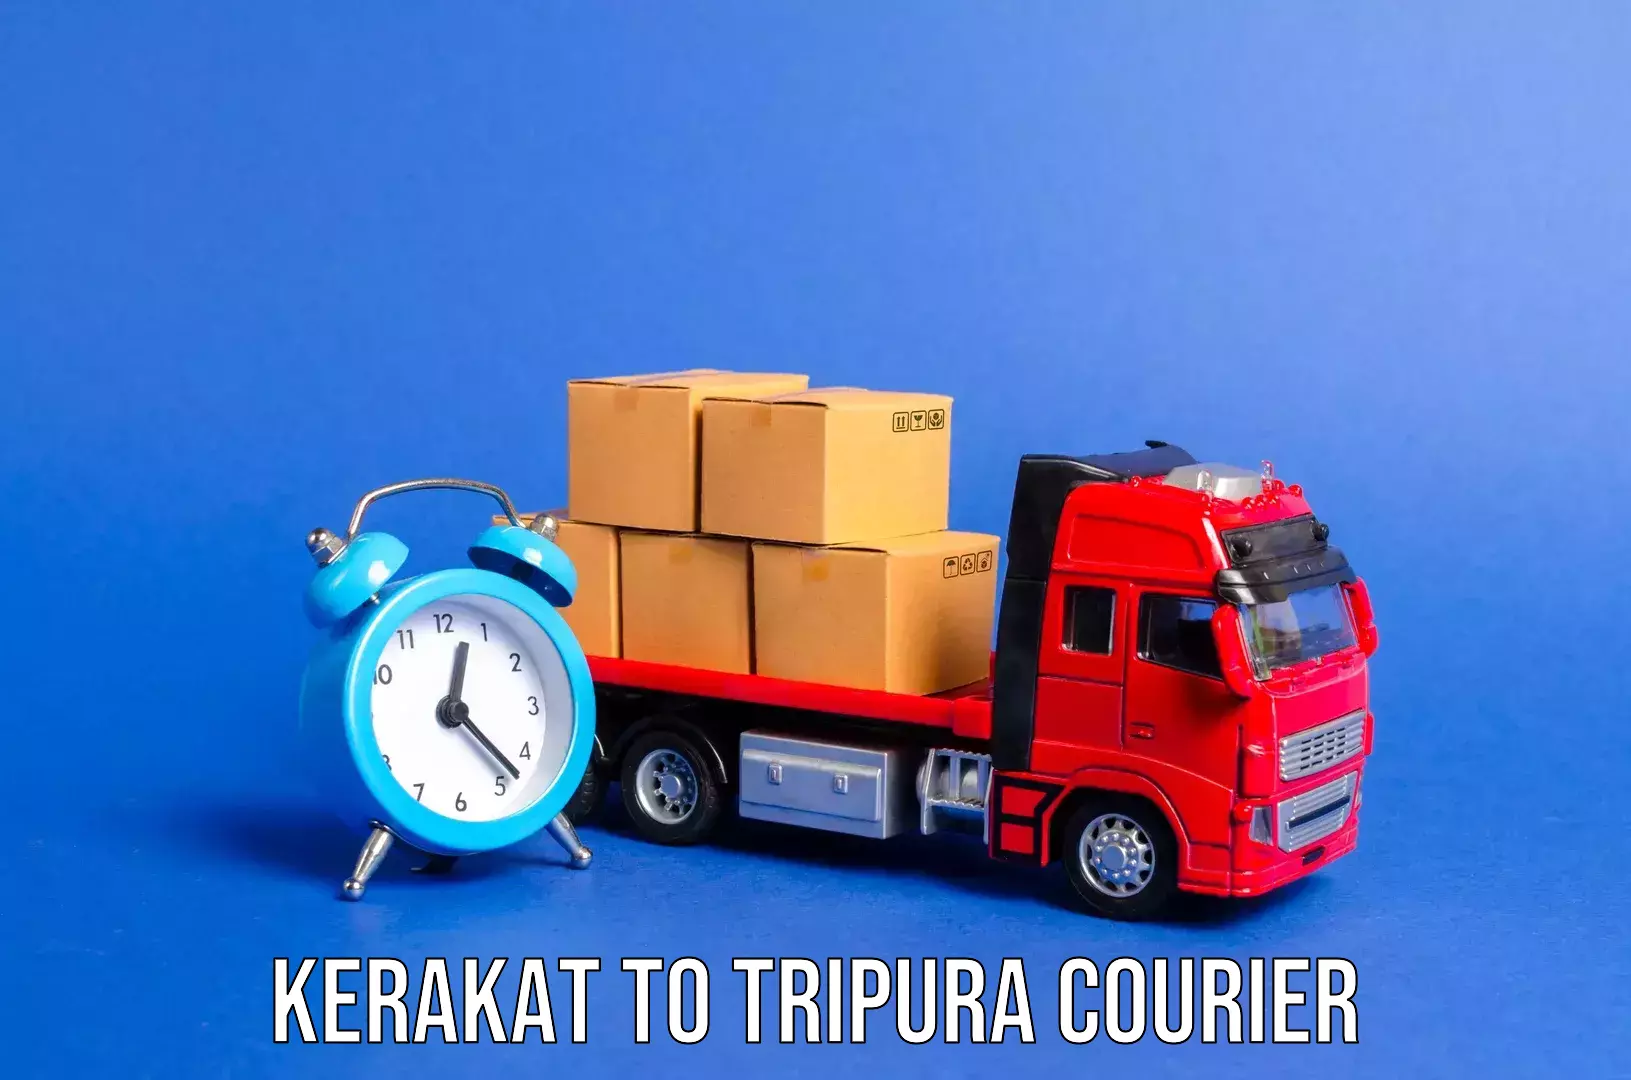 Same day baggage transport in Kerakat to North Tripura